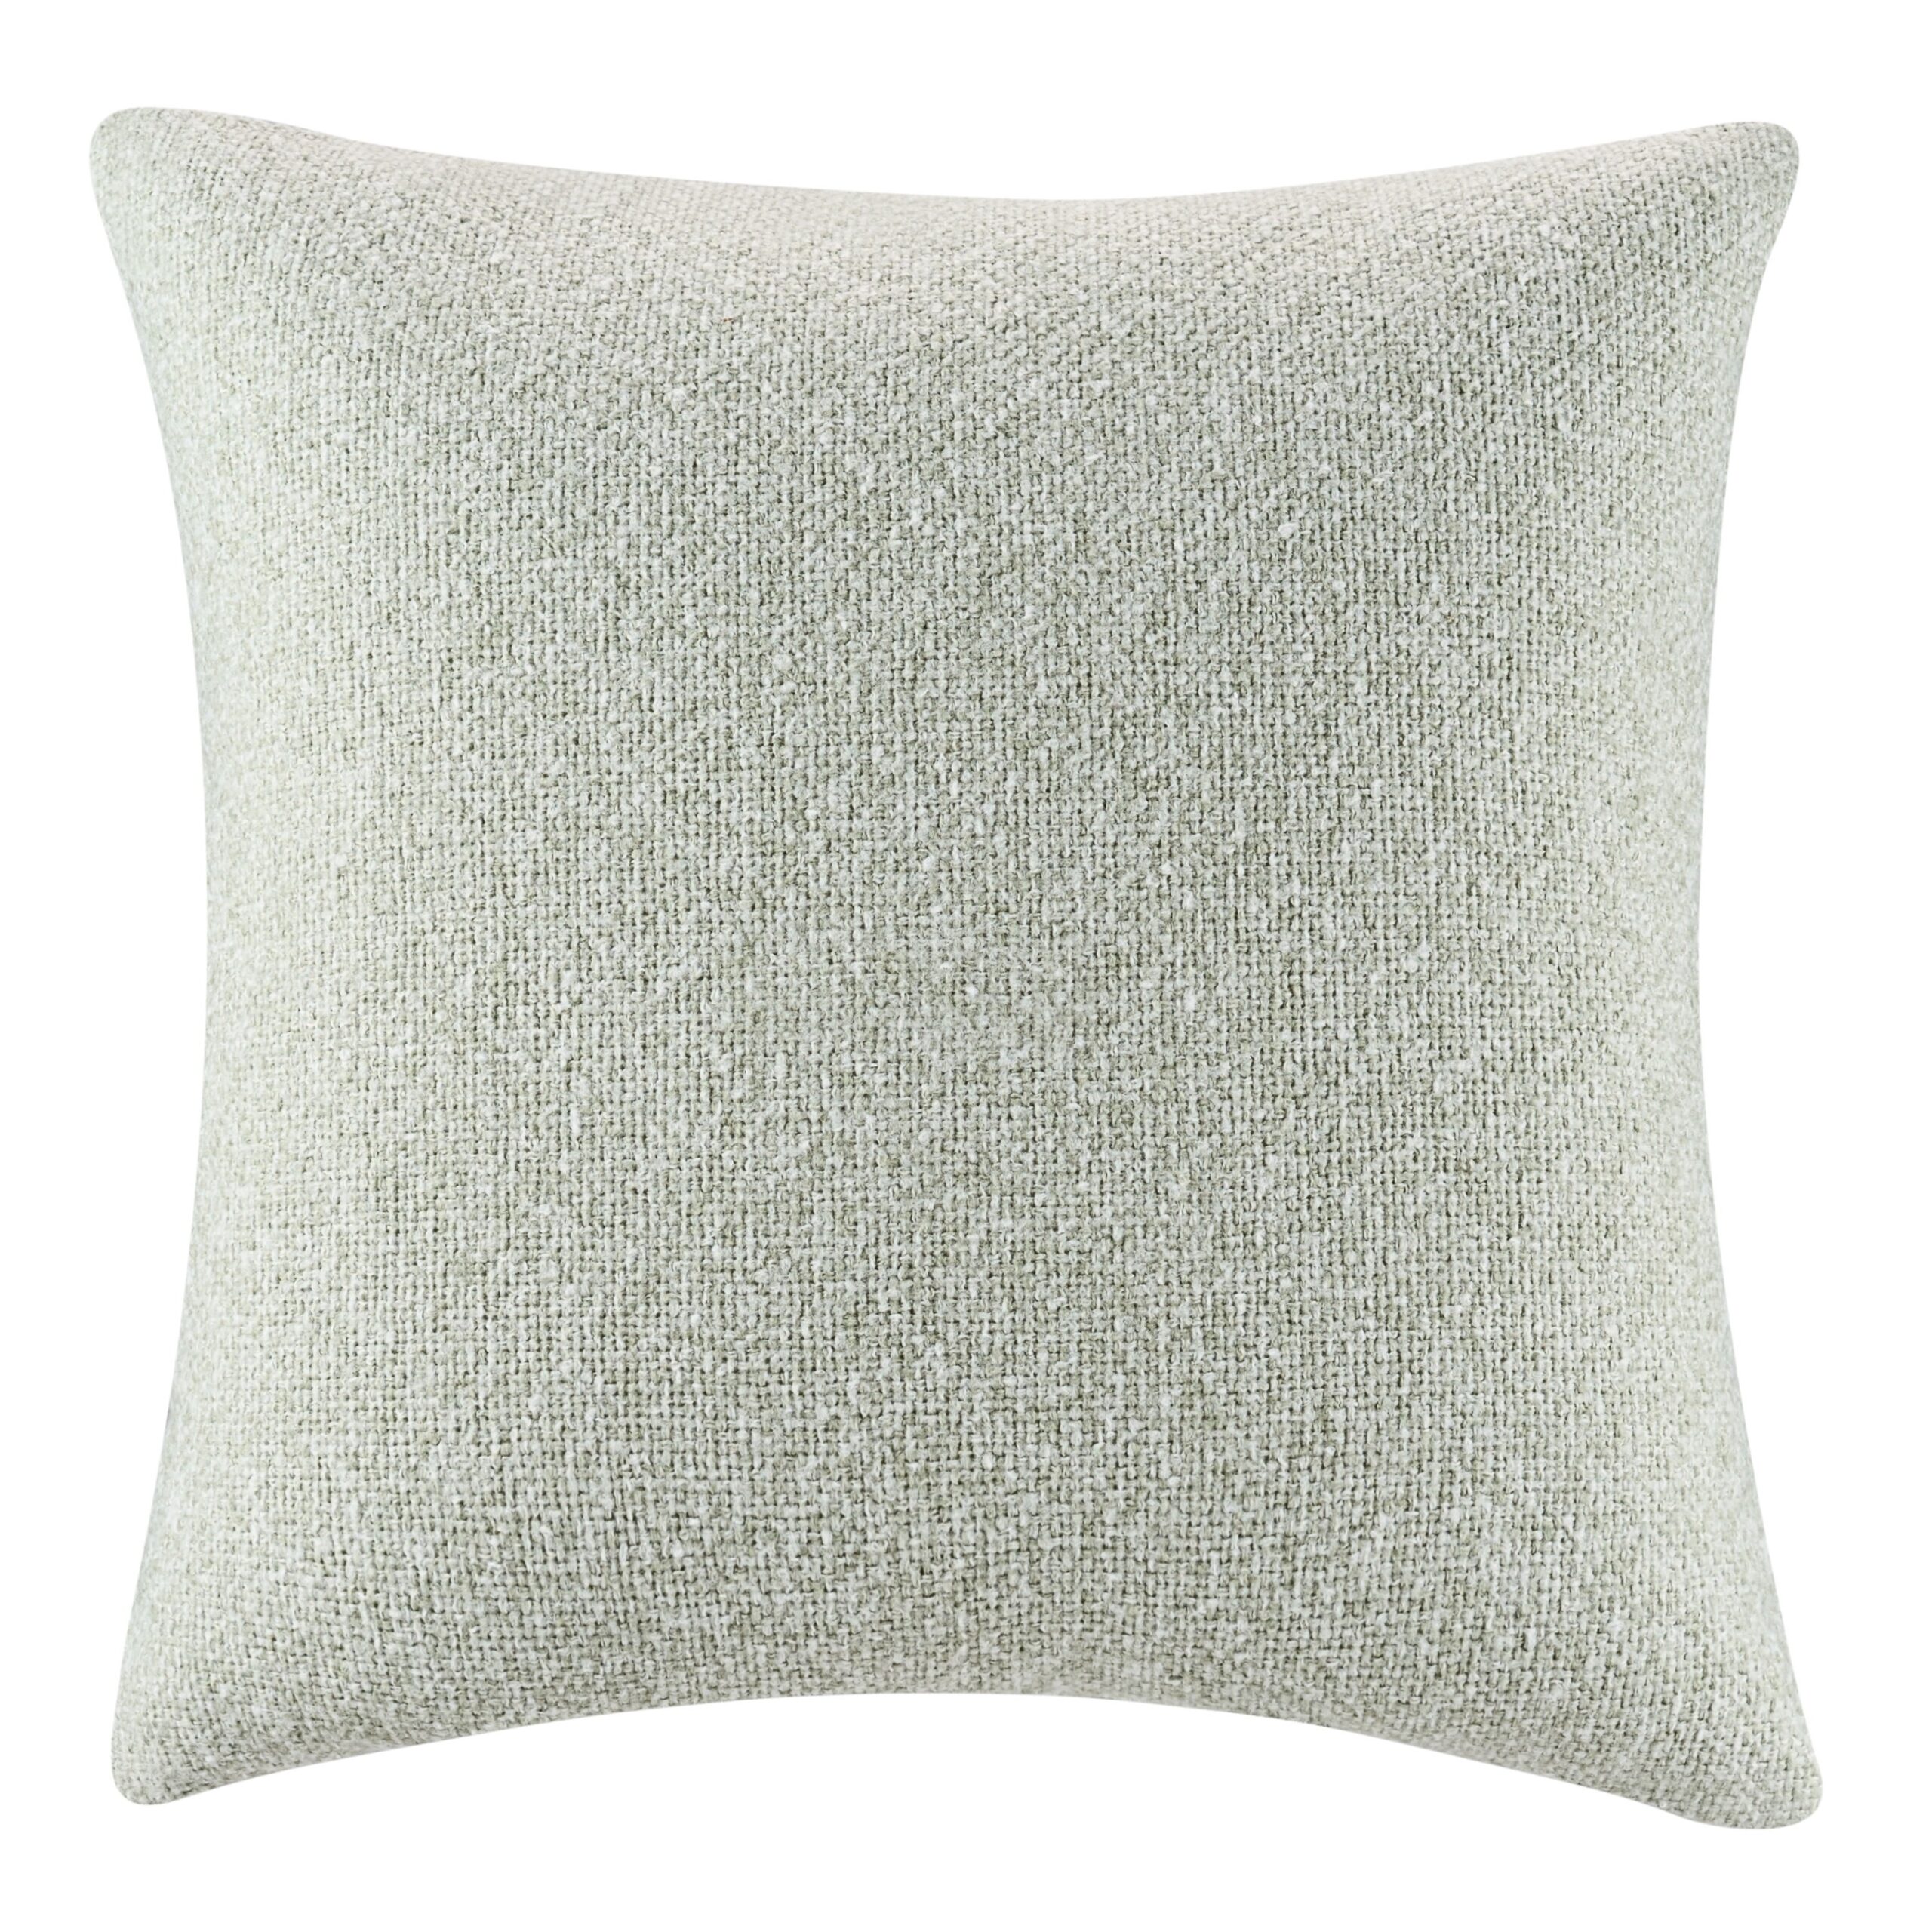 beautiful decorative pillows Bulan 4 Beautiful Decorative Boucle Pillow, Sage Green,  x  inches, by Drew  Barrymore